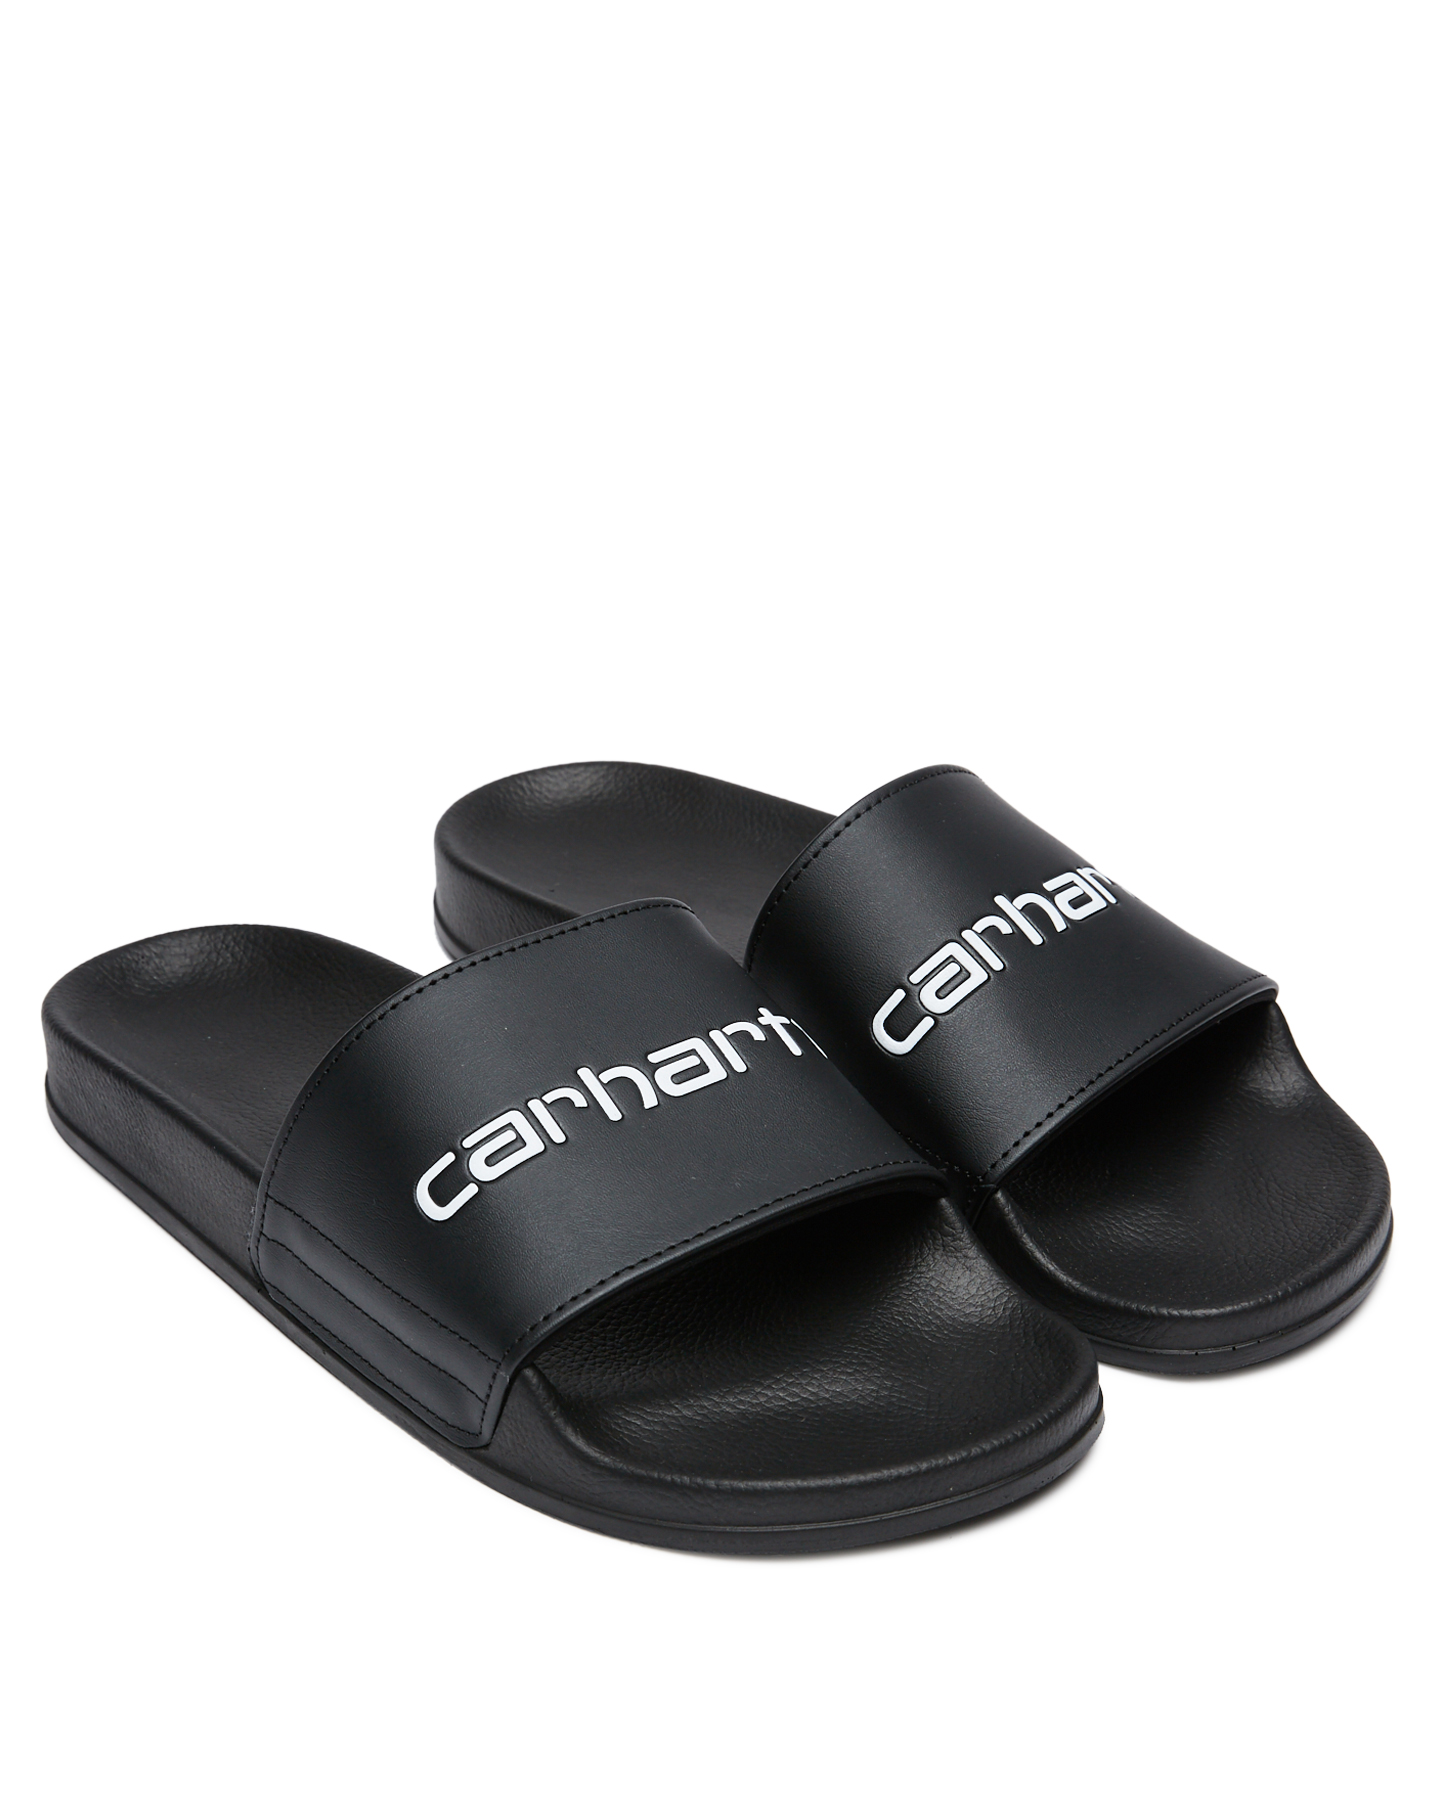 Carhartt Carhartt Slippers - Black White | SurfStitch